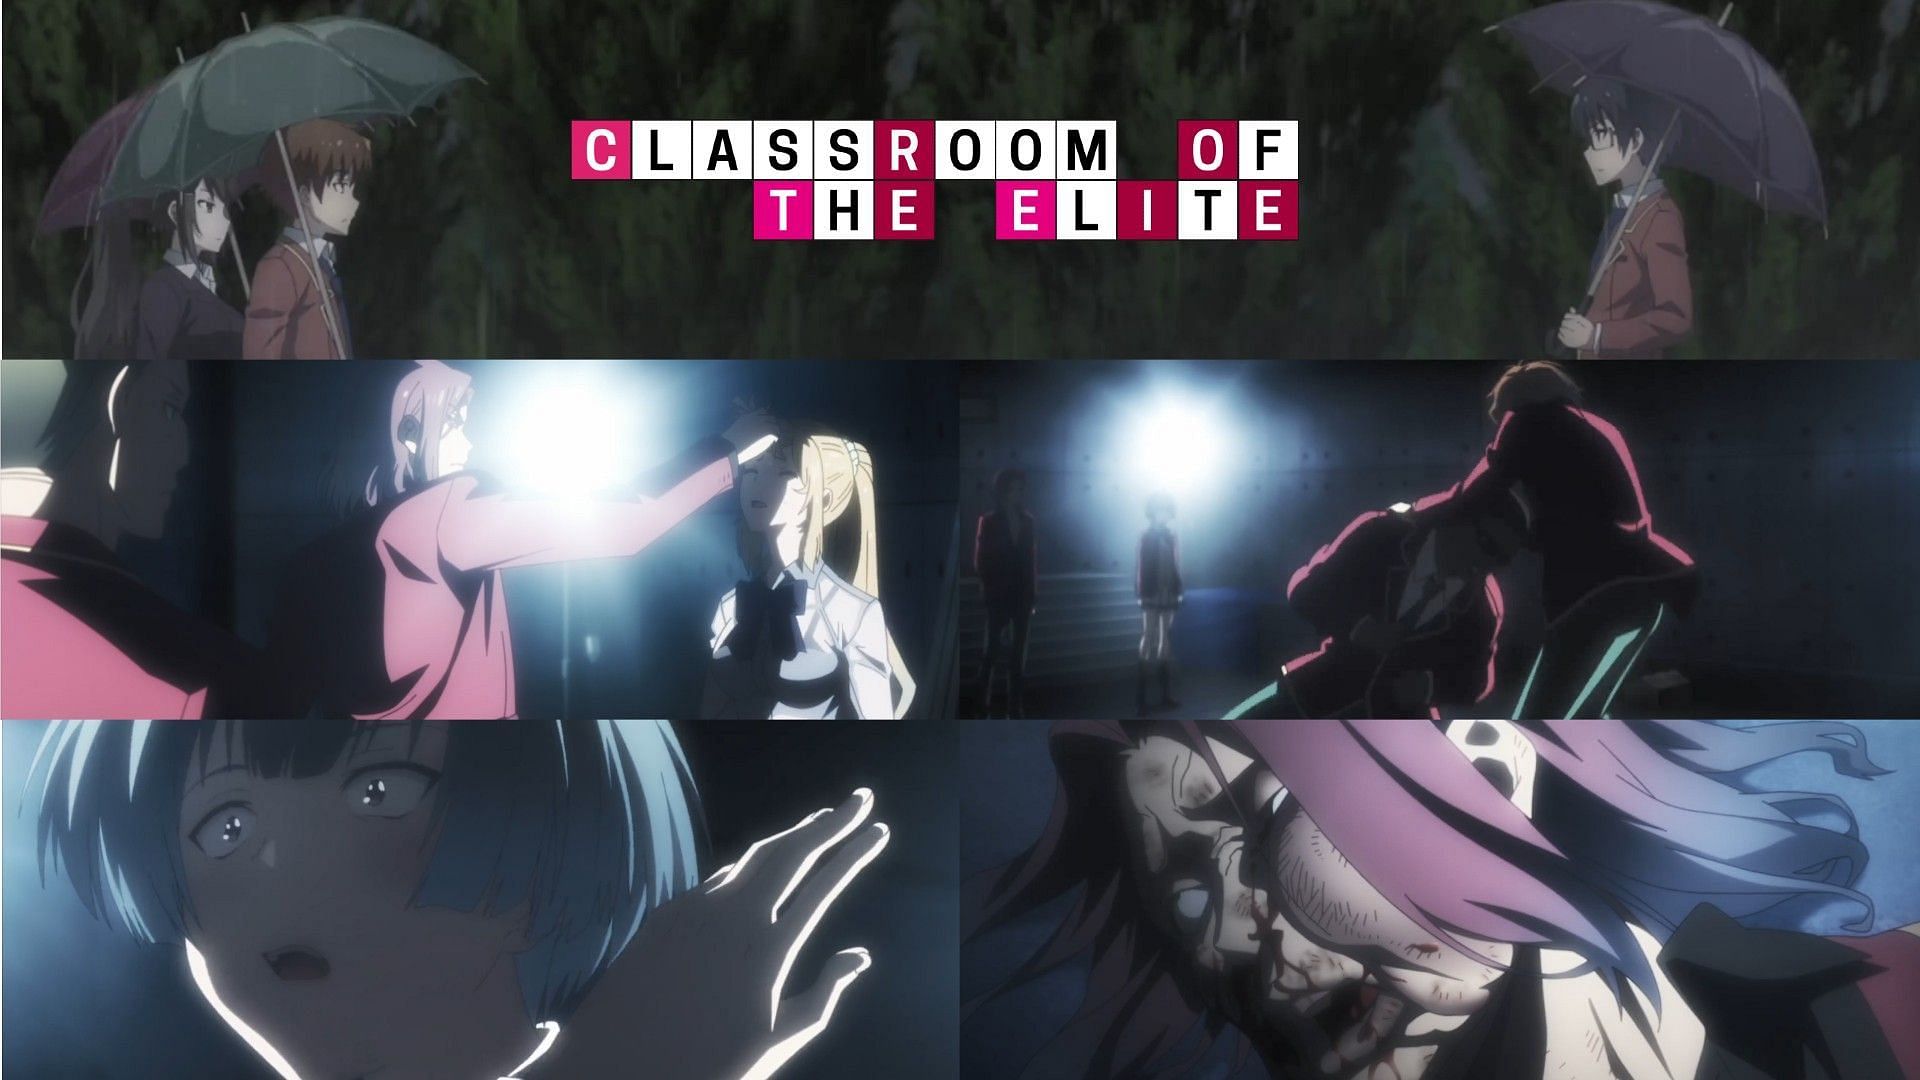 Classroom of the Elite season 2 episode 12 review - Kiyotaka and Ryuuen's  ultimate showdown